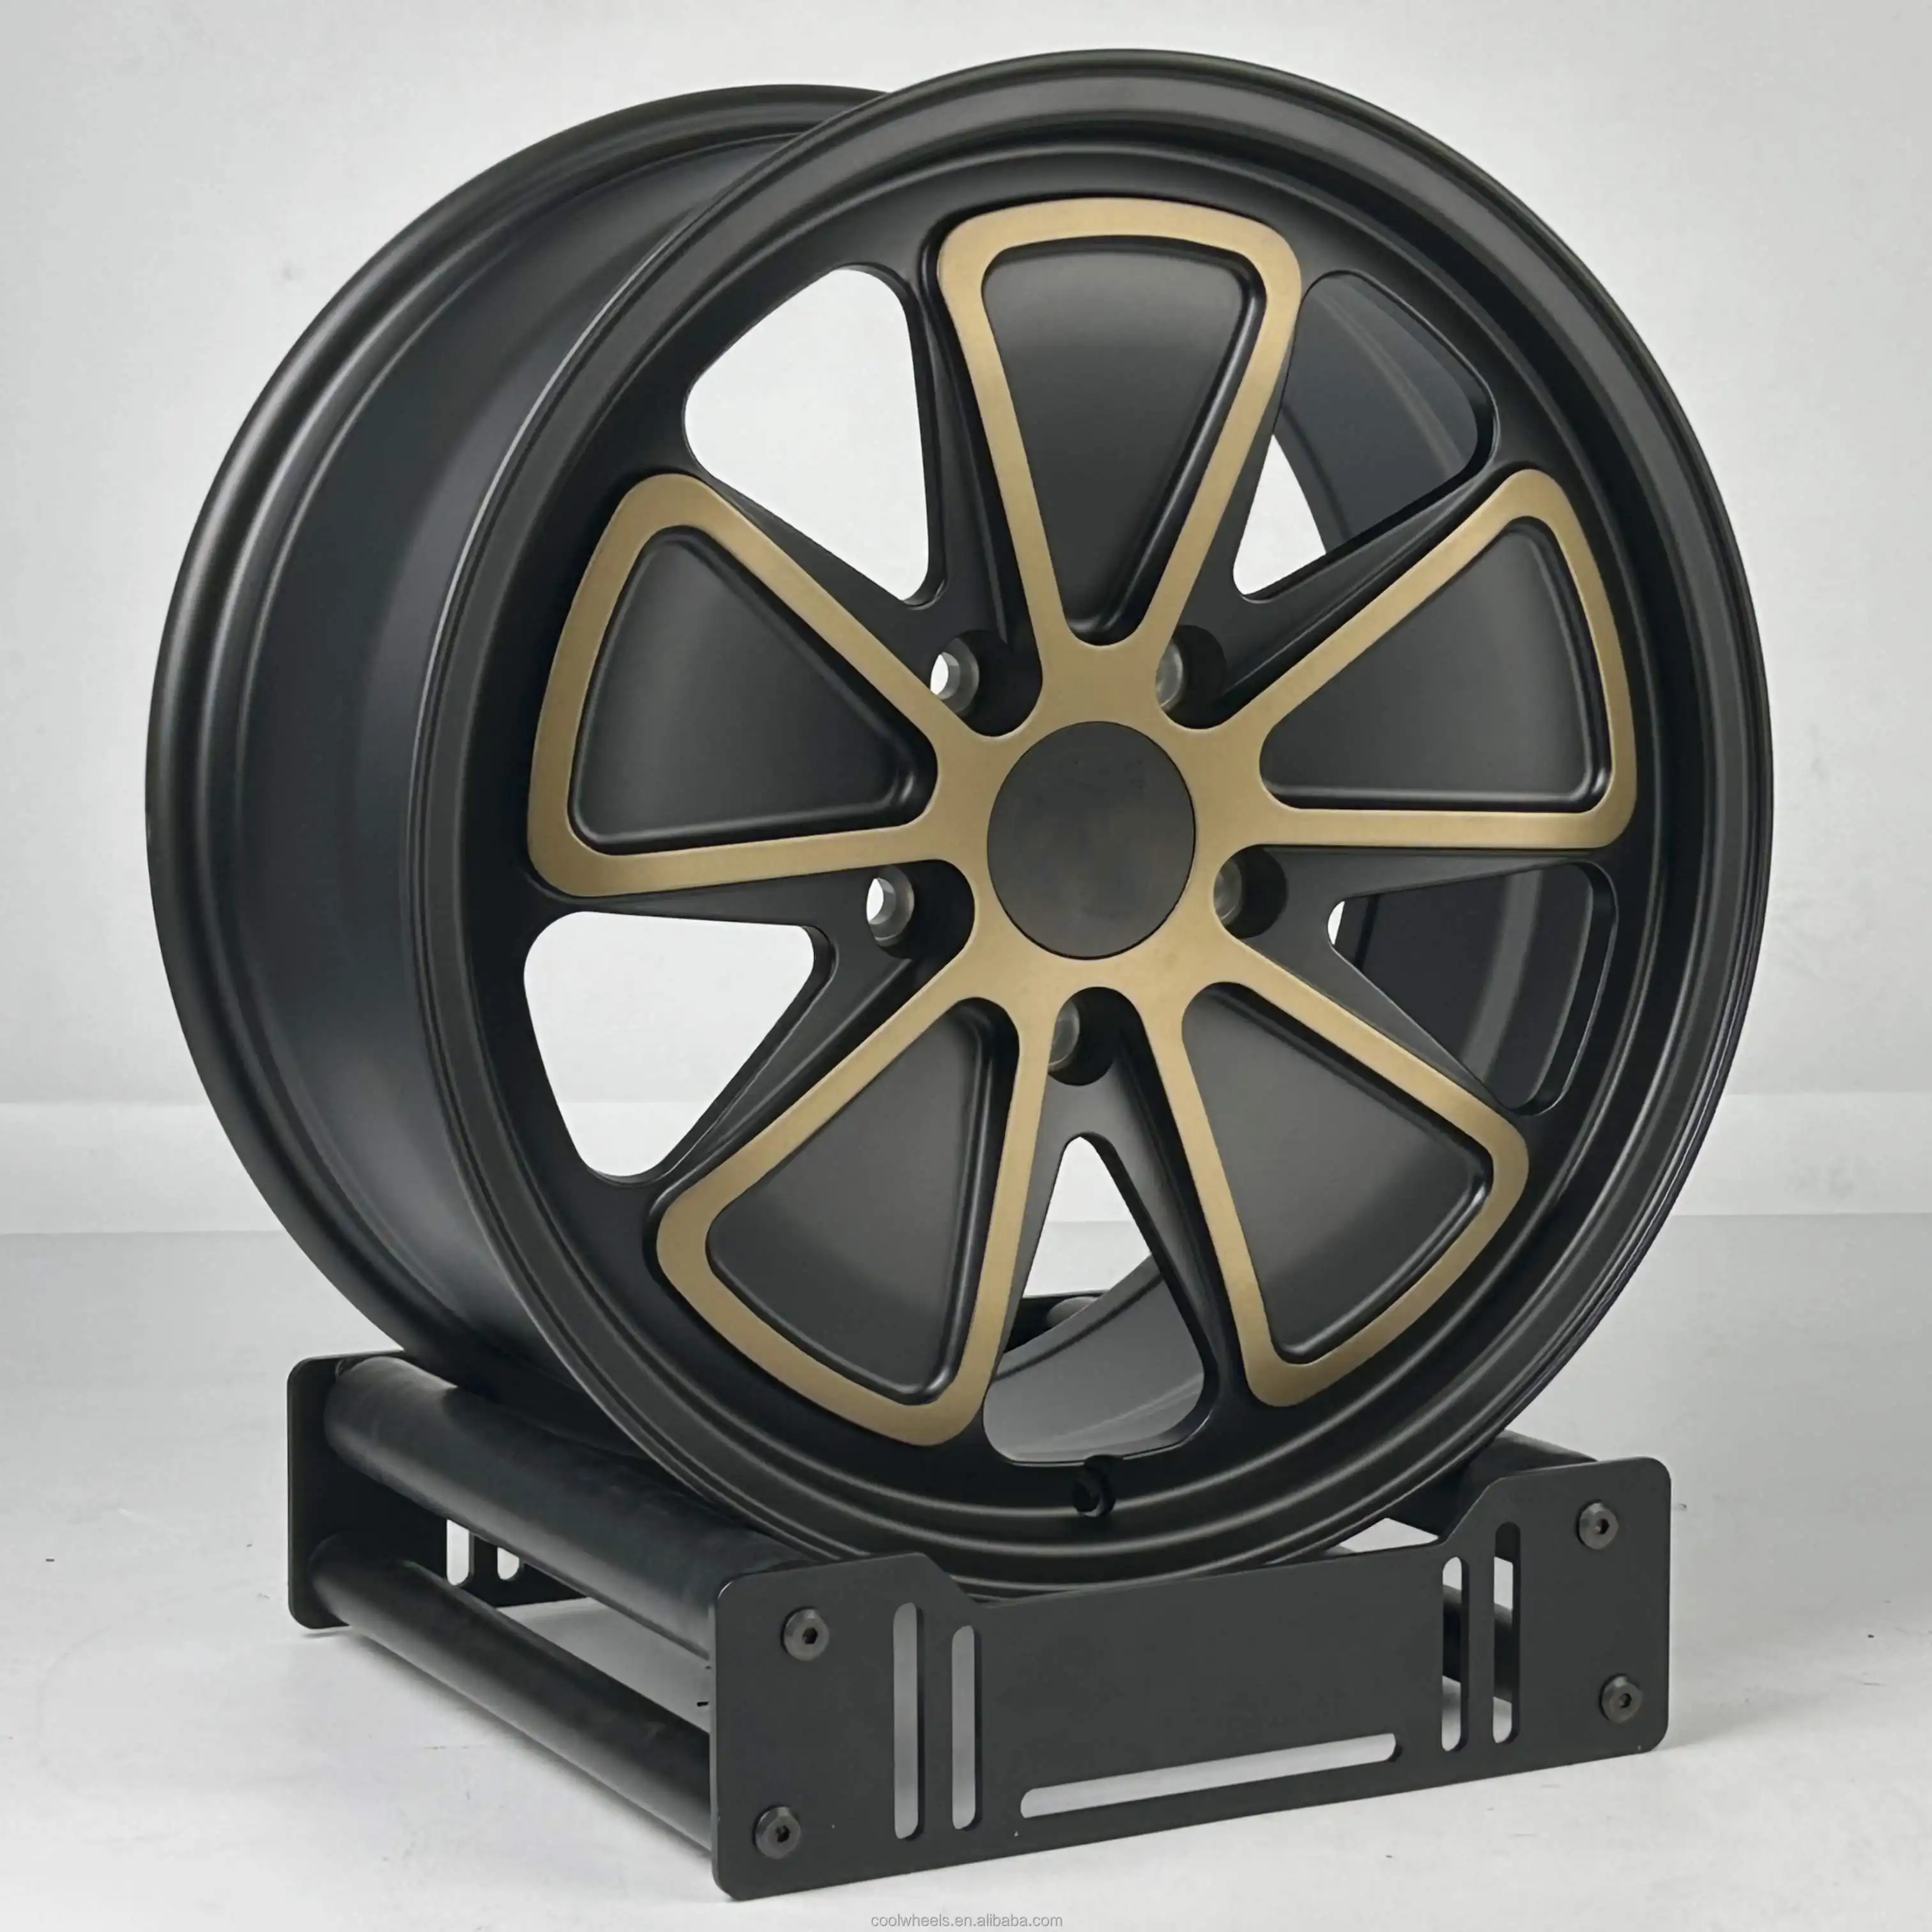 Bku 5x130 wheels 17 18 19 20 21 inch rims sport forged alloy racing car wheels disc for Porsche 964 turbo 960 911 991 992 944